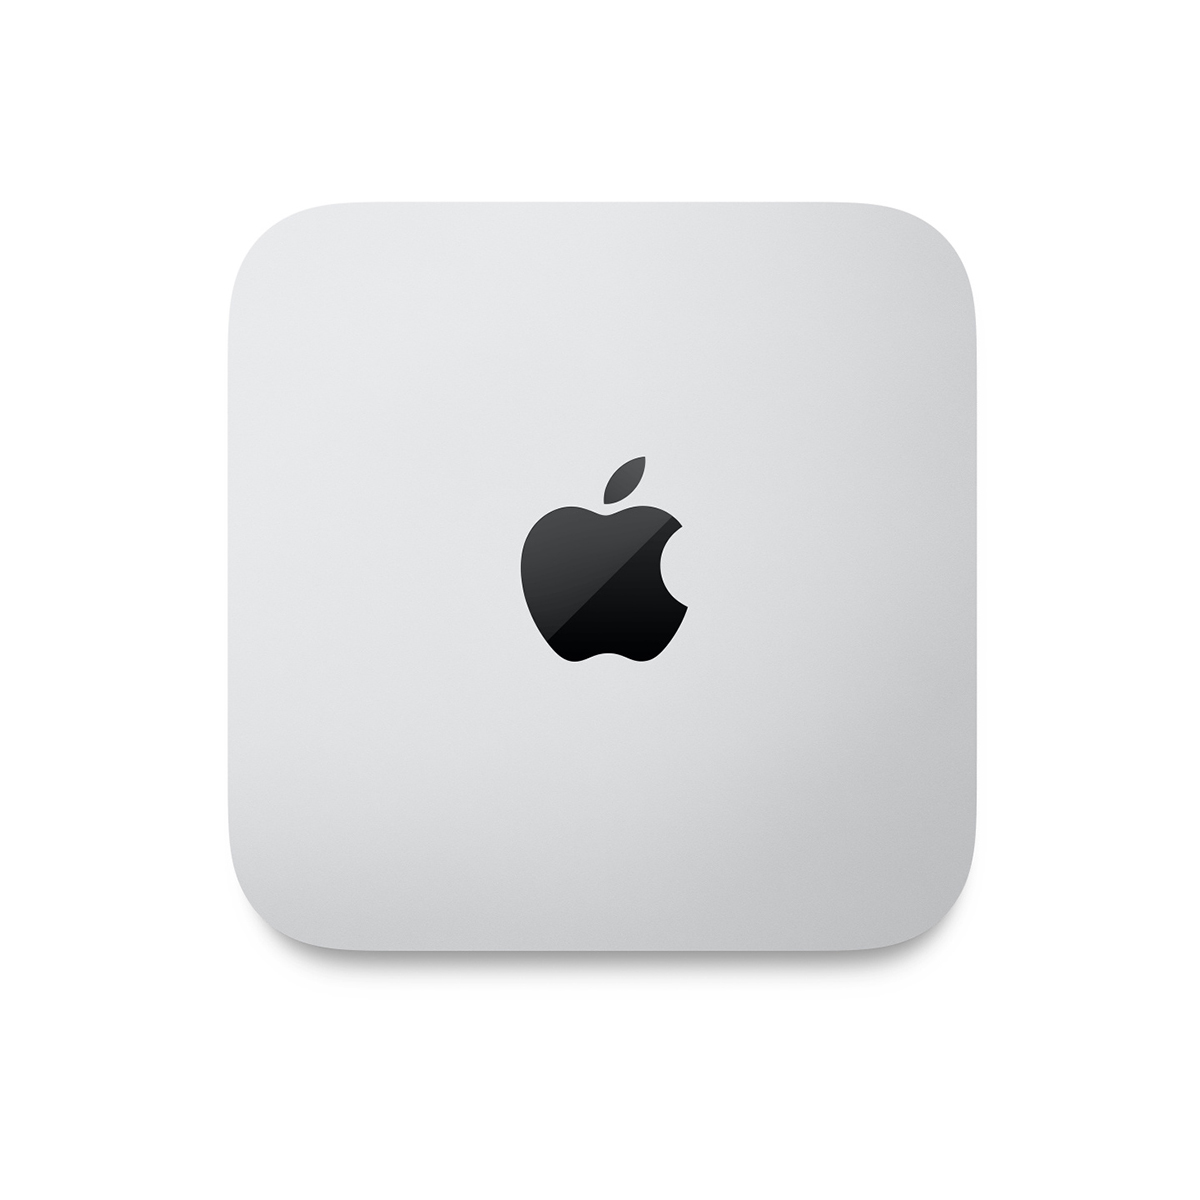 Mac mini: Apple M2 Pro chip with 10core CPU and 16core GPU, 512GB SSD